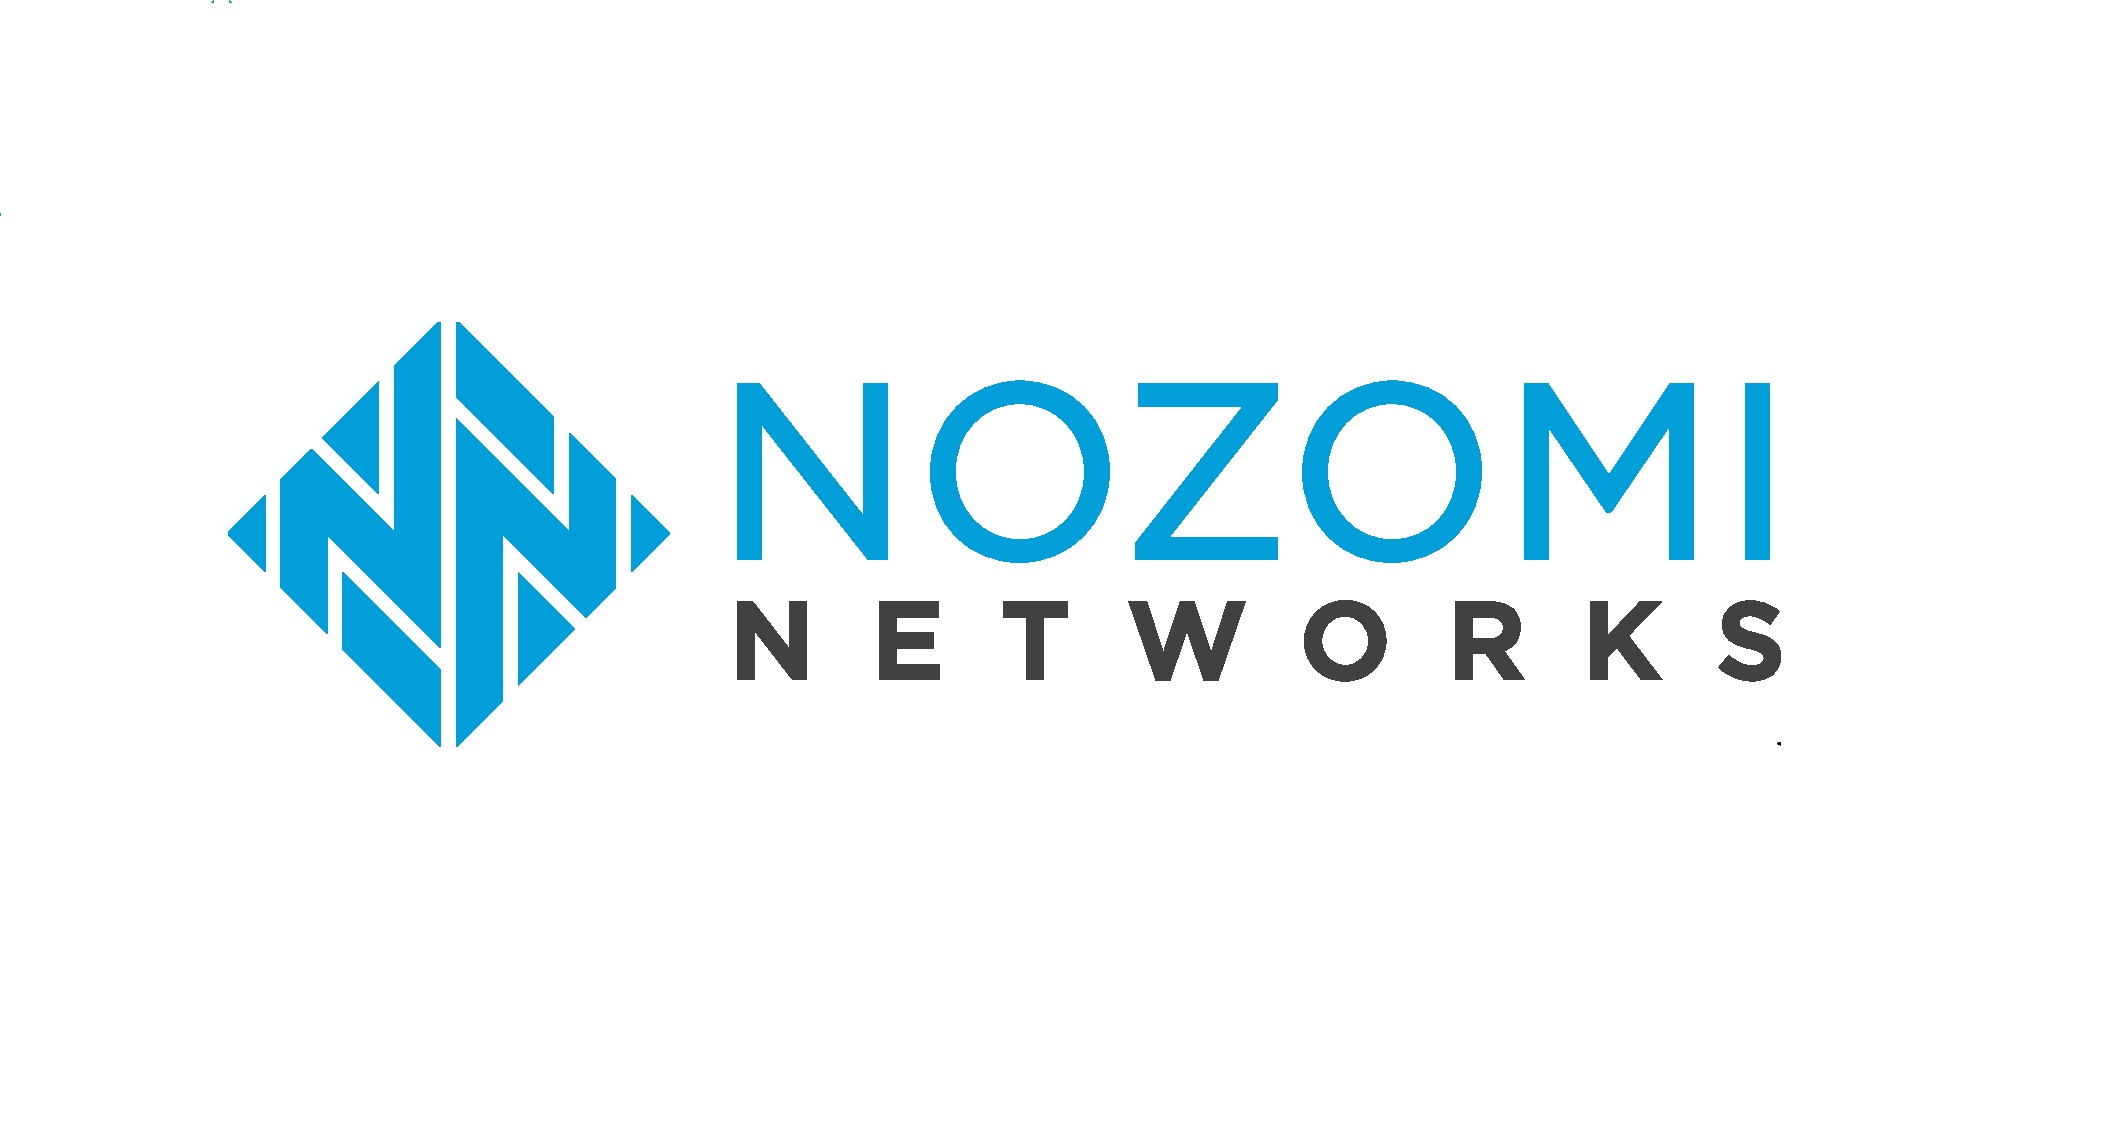 Nozomi Networks